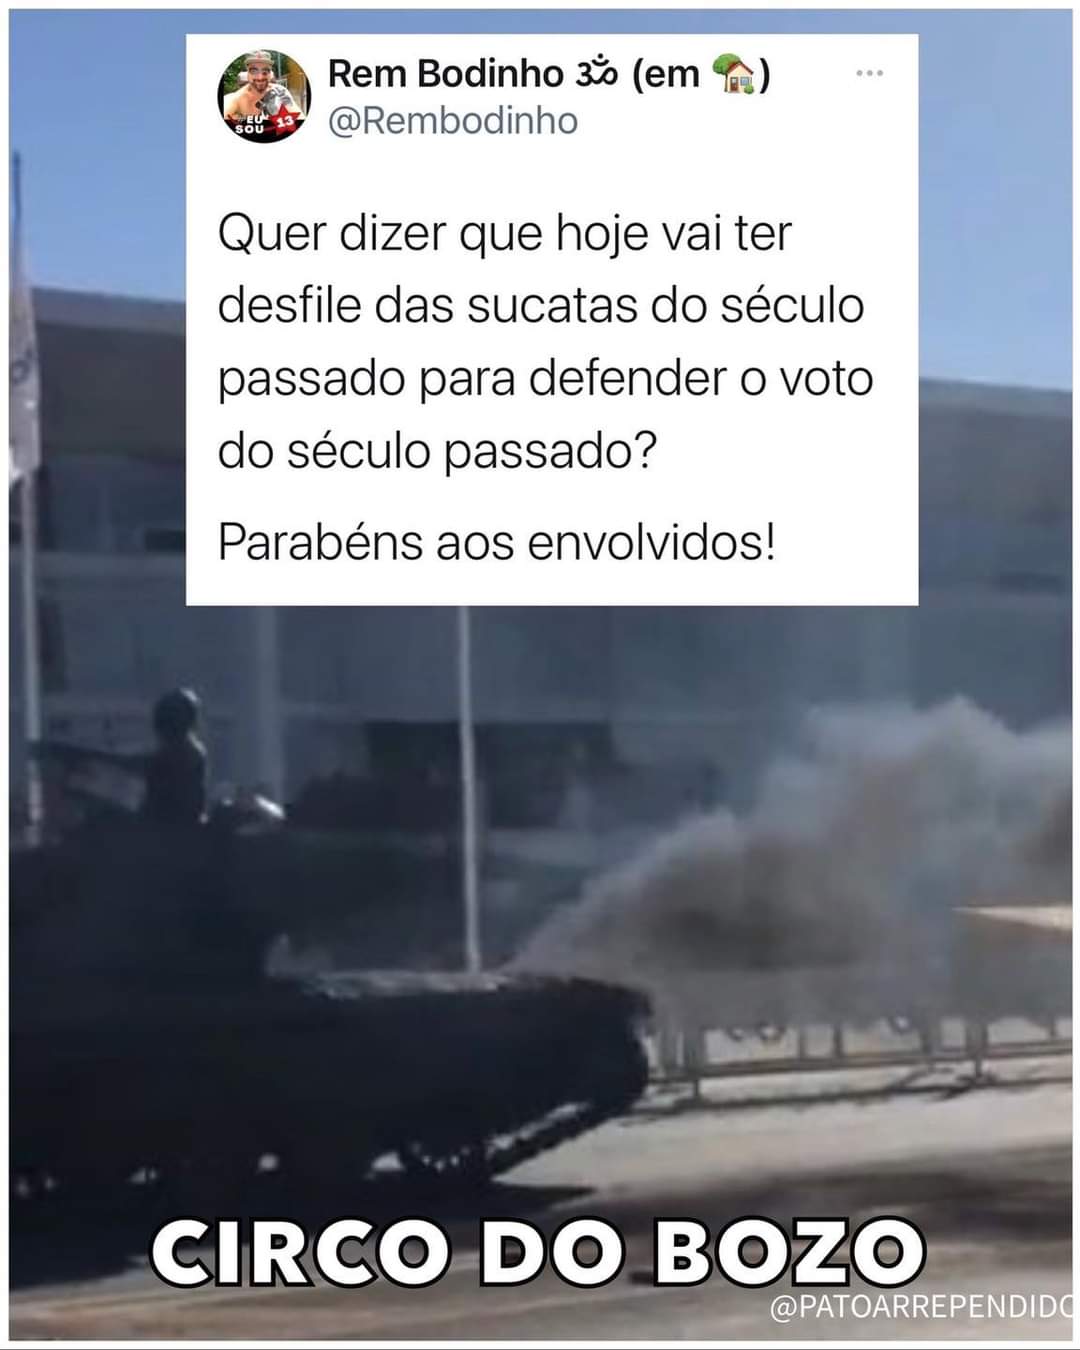 Desfile de blindados militares em Brasília vira meme nas redes